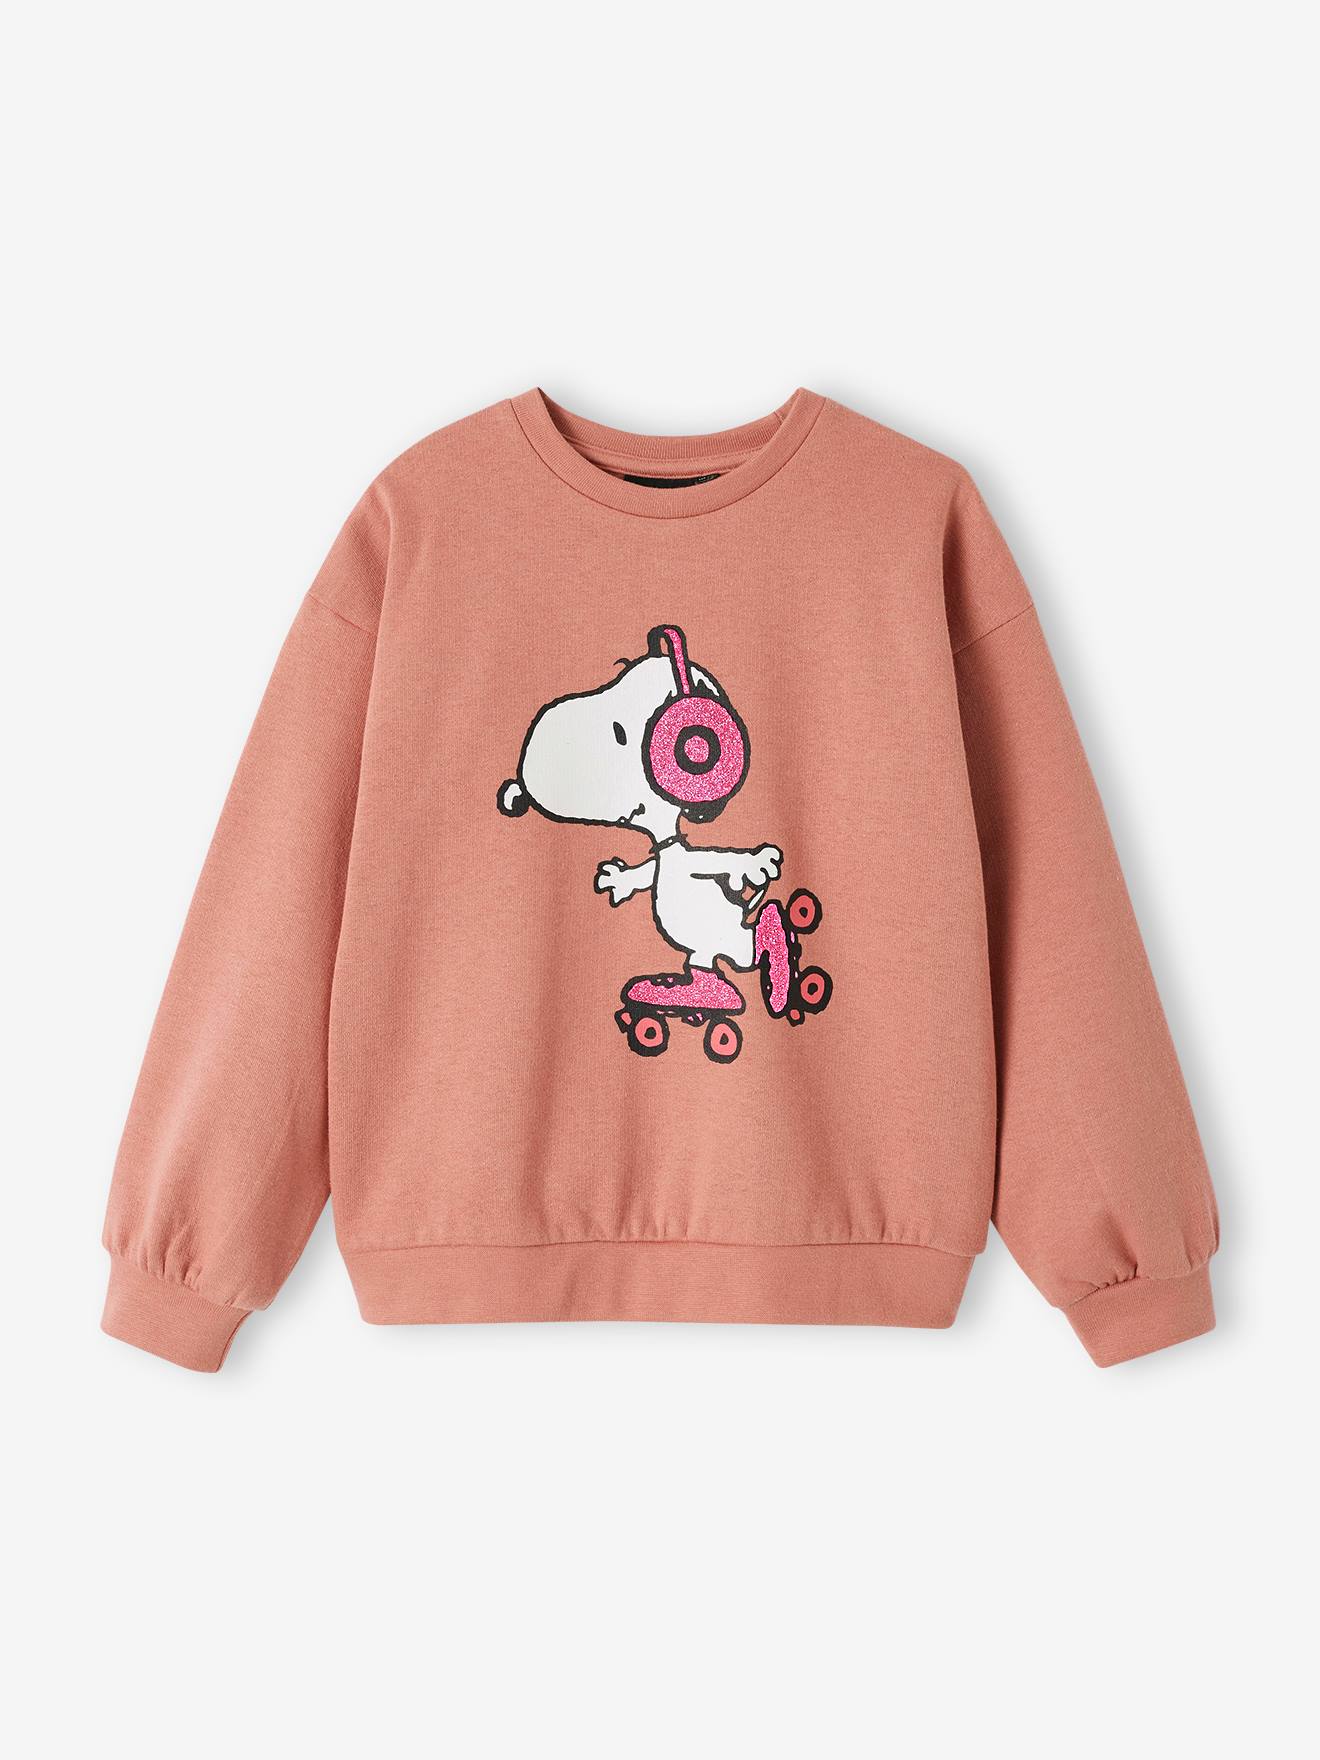 Peanuts(r) Snoopy Sweatshirt for Girls old rose